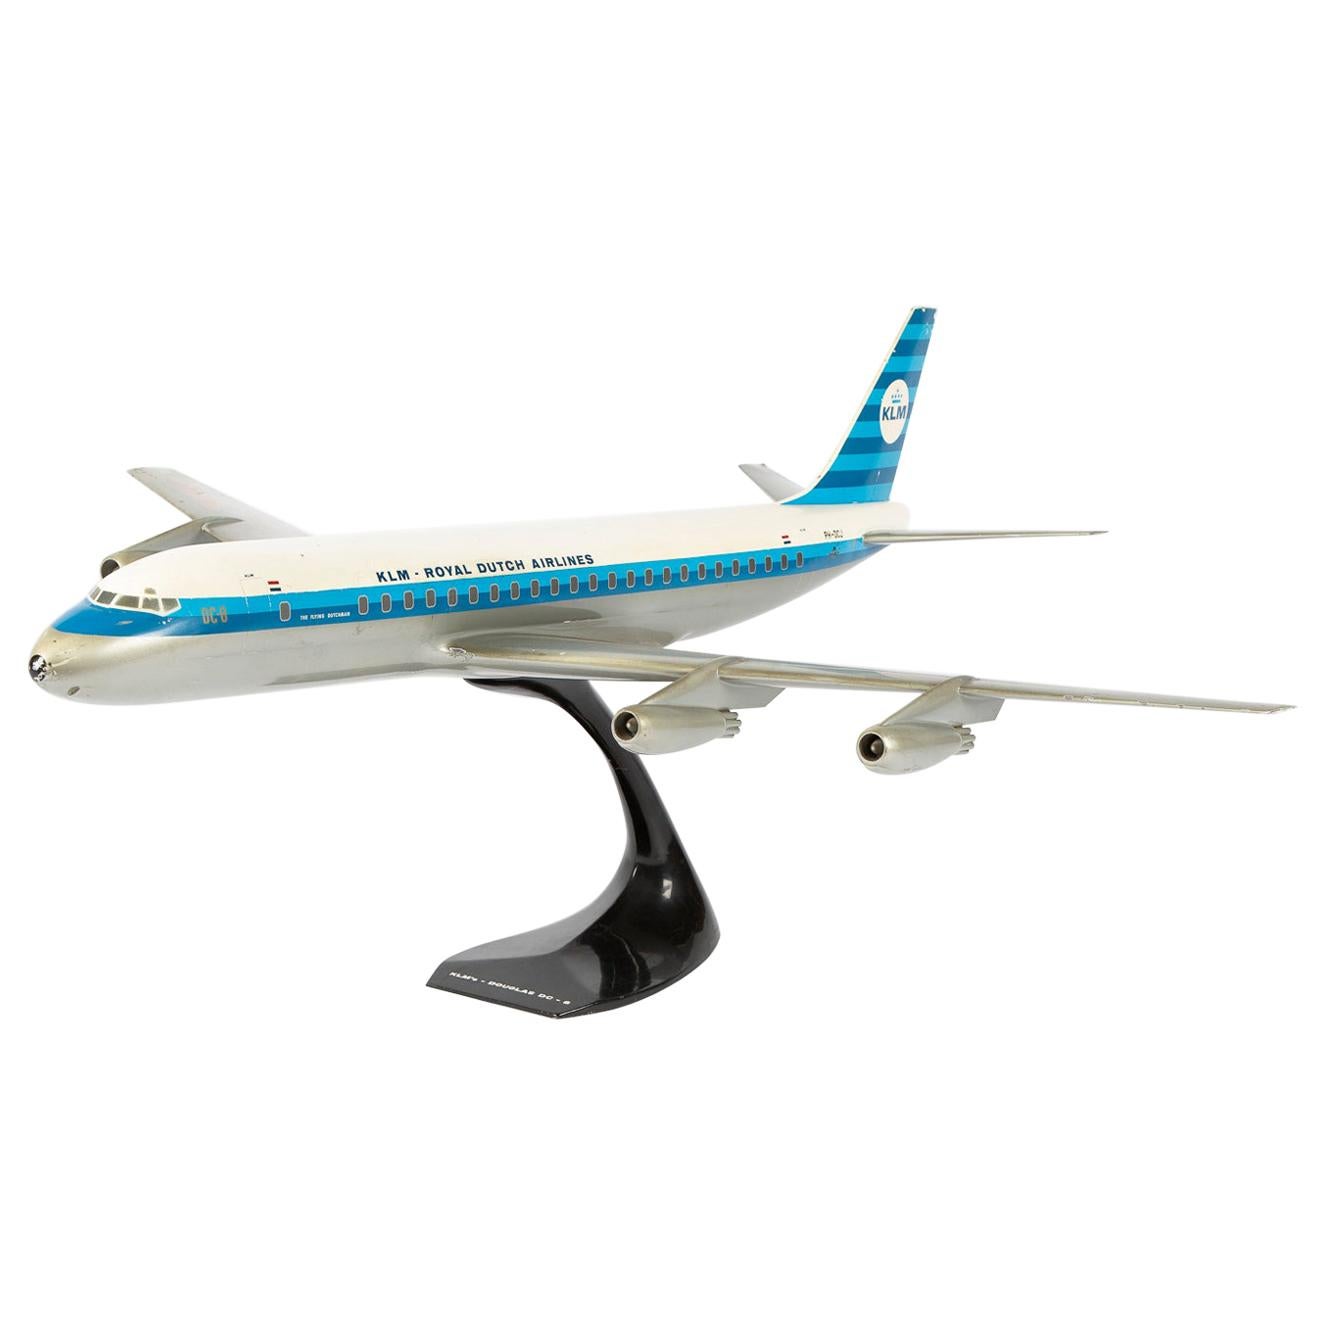 Scale-Modell der KLM DC-8, bekannt als The Flying Dutchman